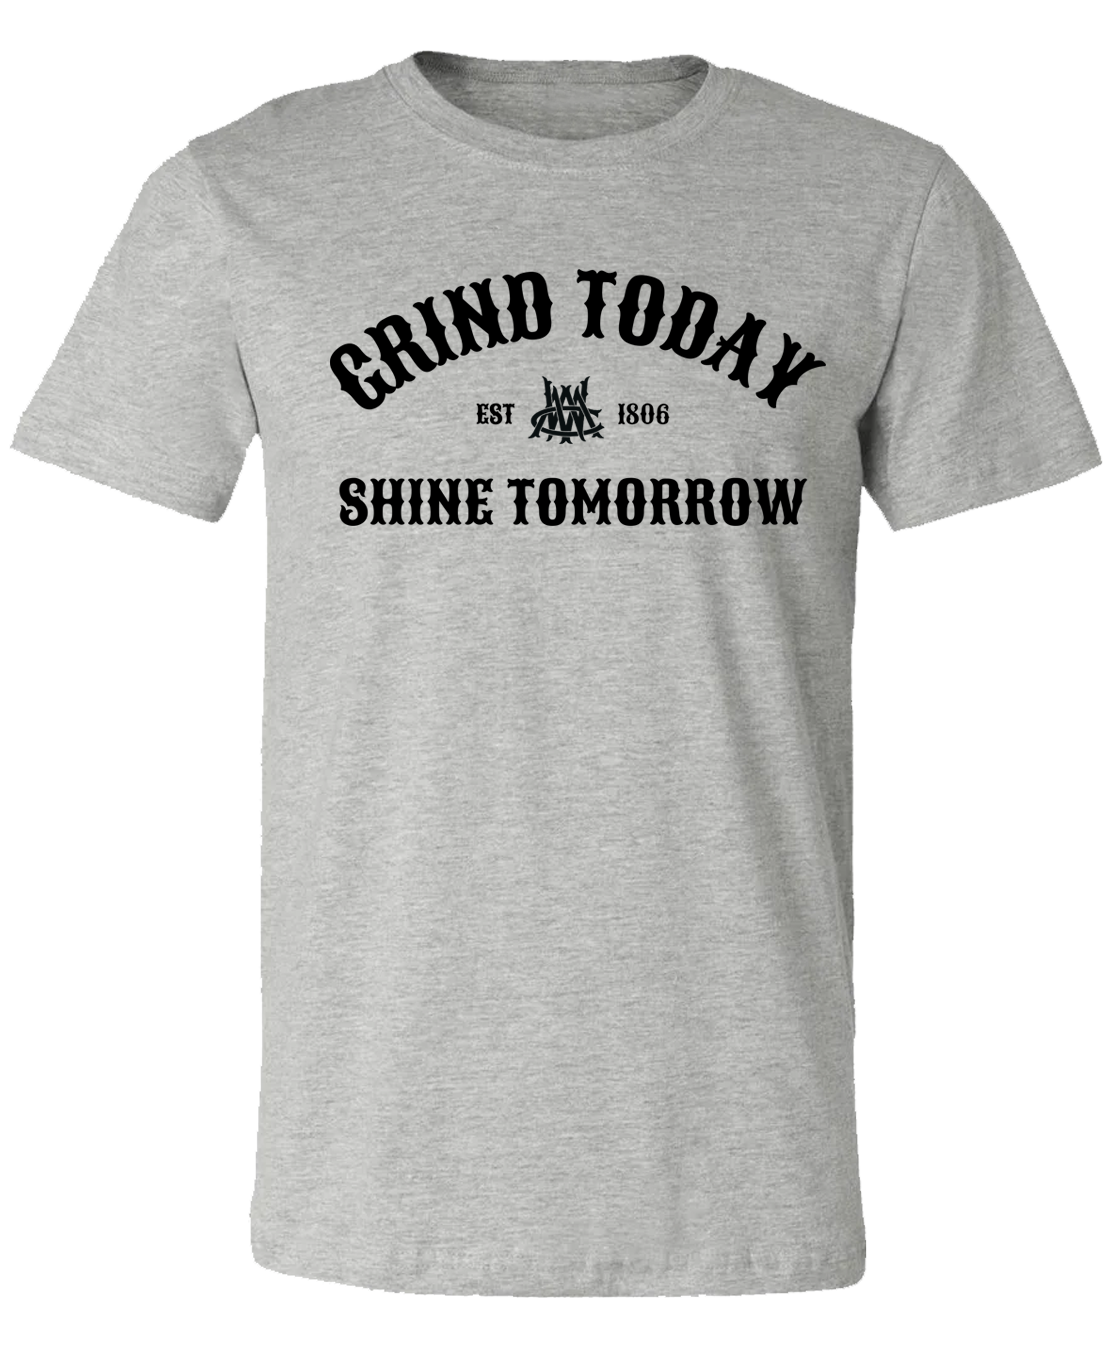 Grind Today Shine Tomorrow Tee